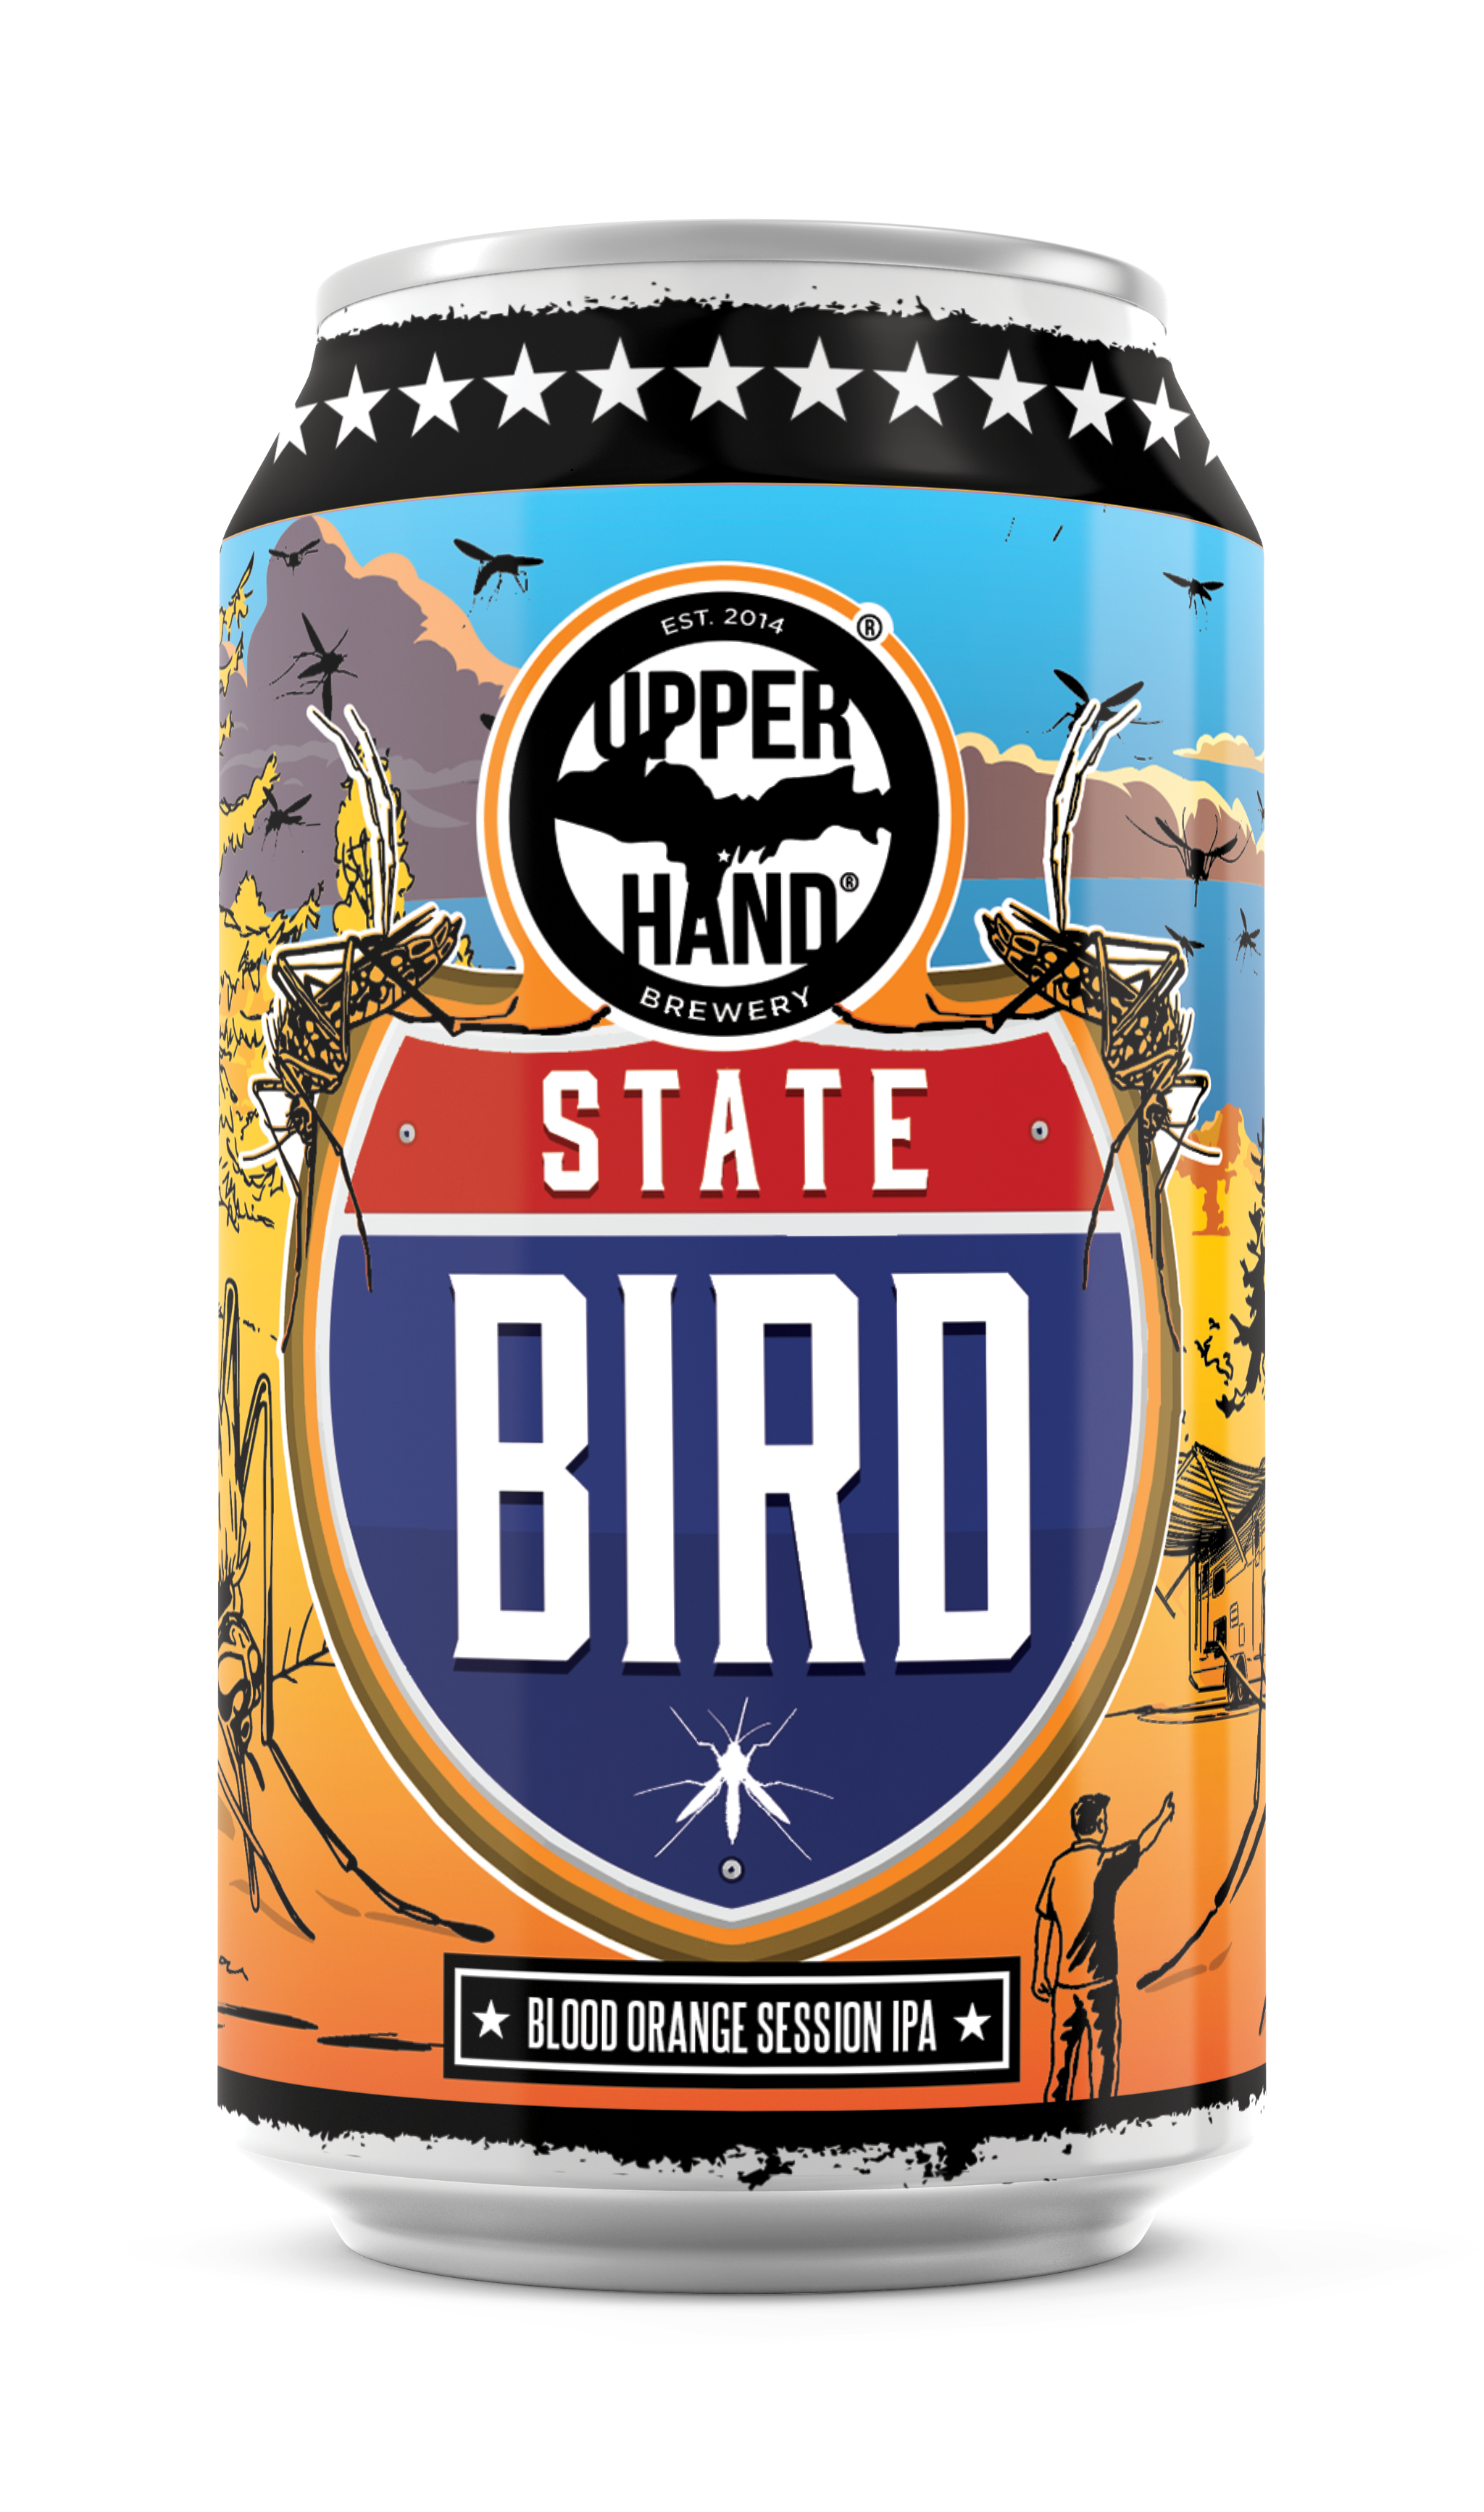 State Bird Brand Rendering